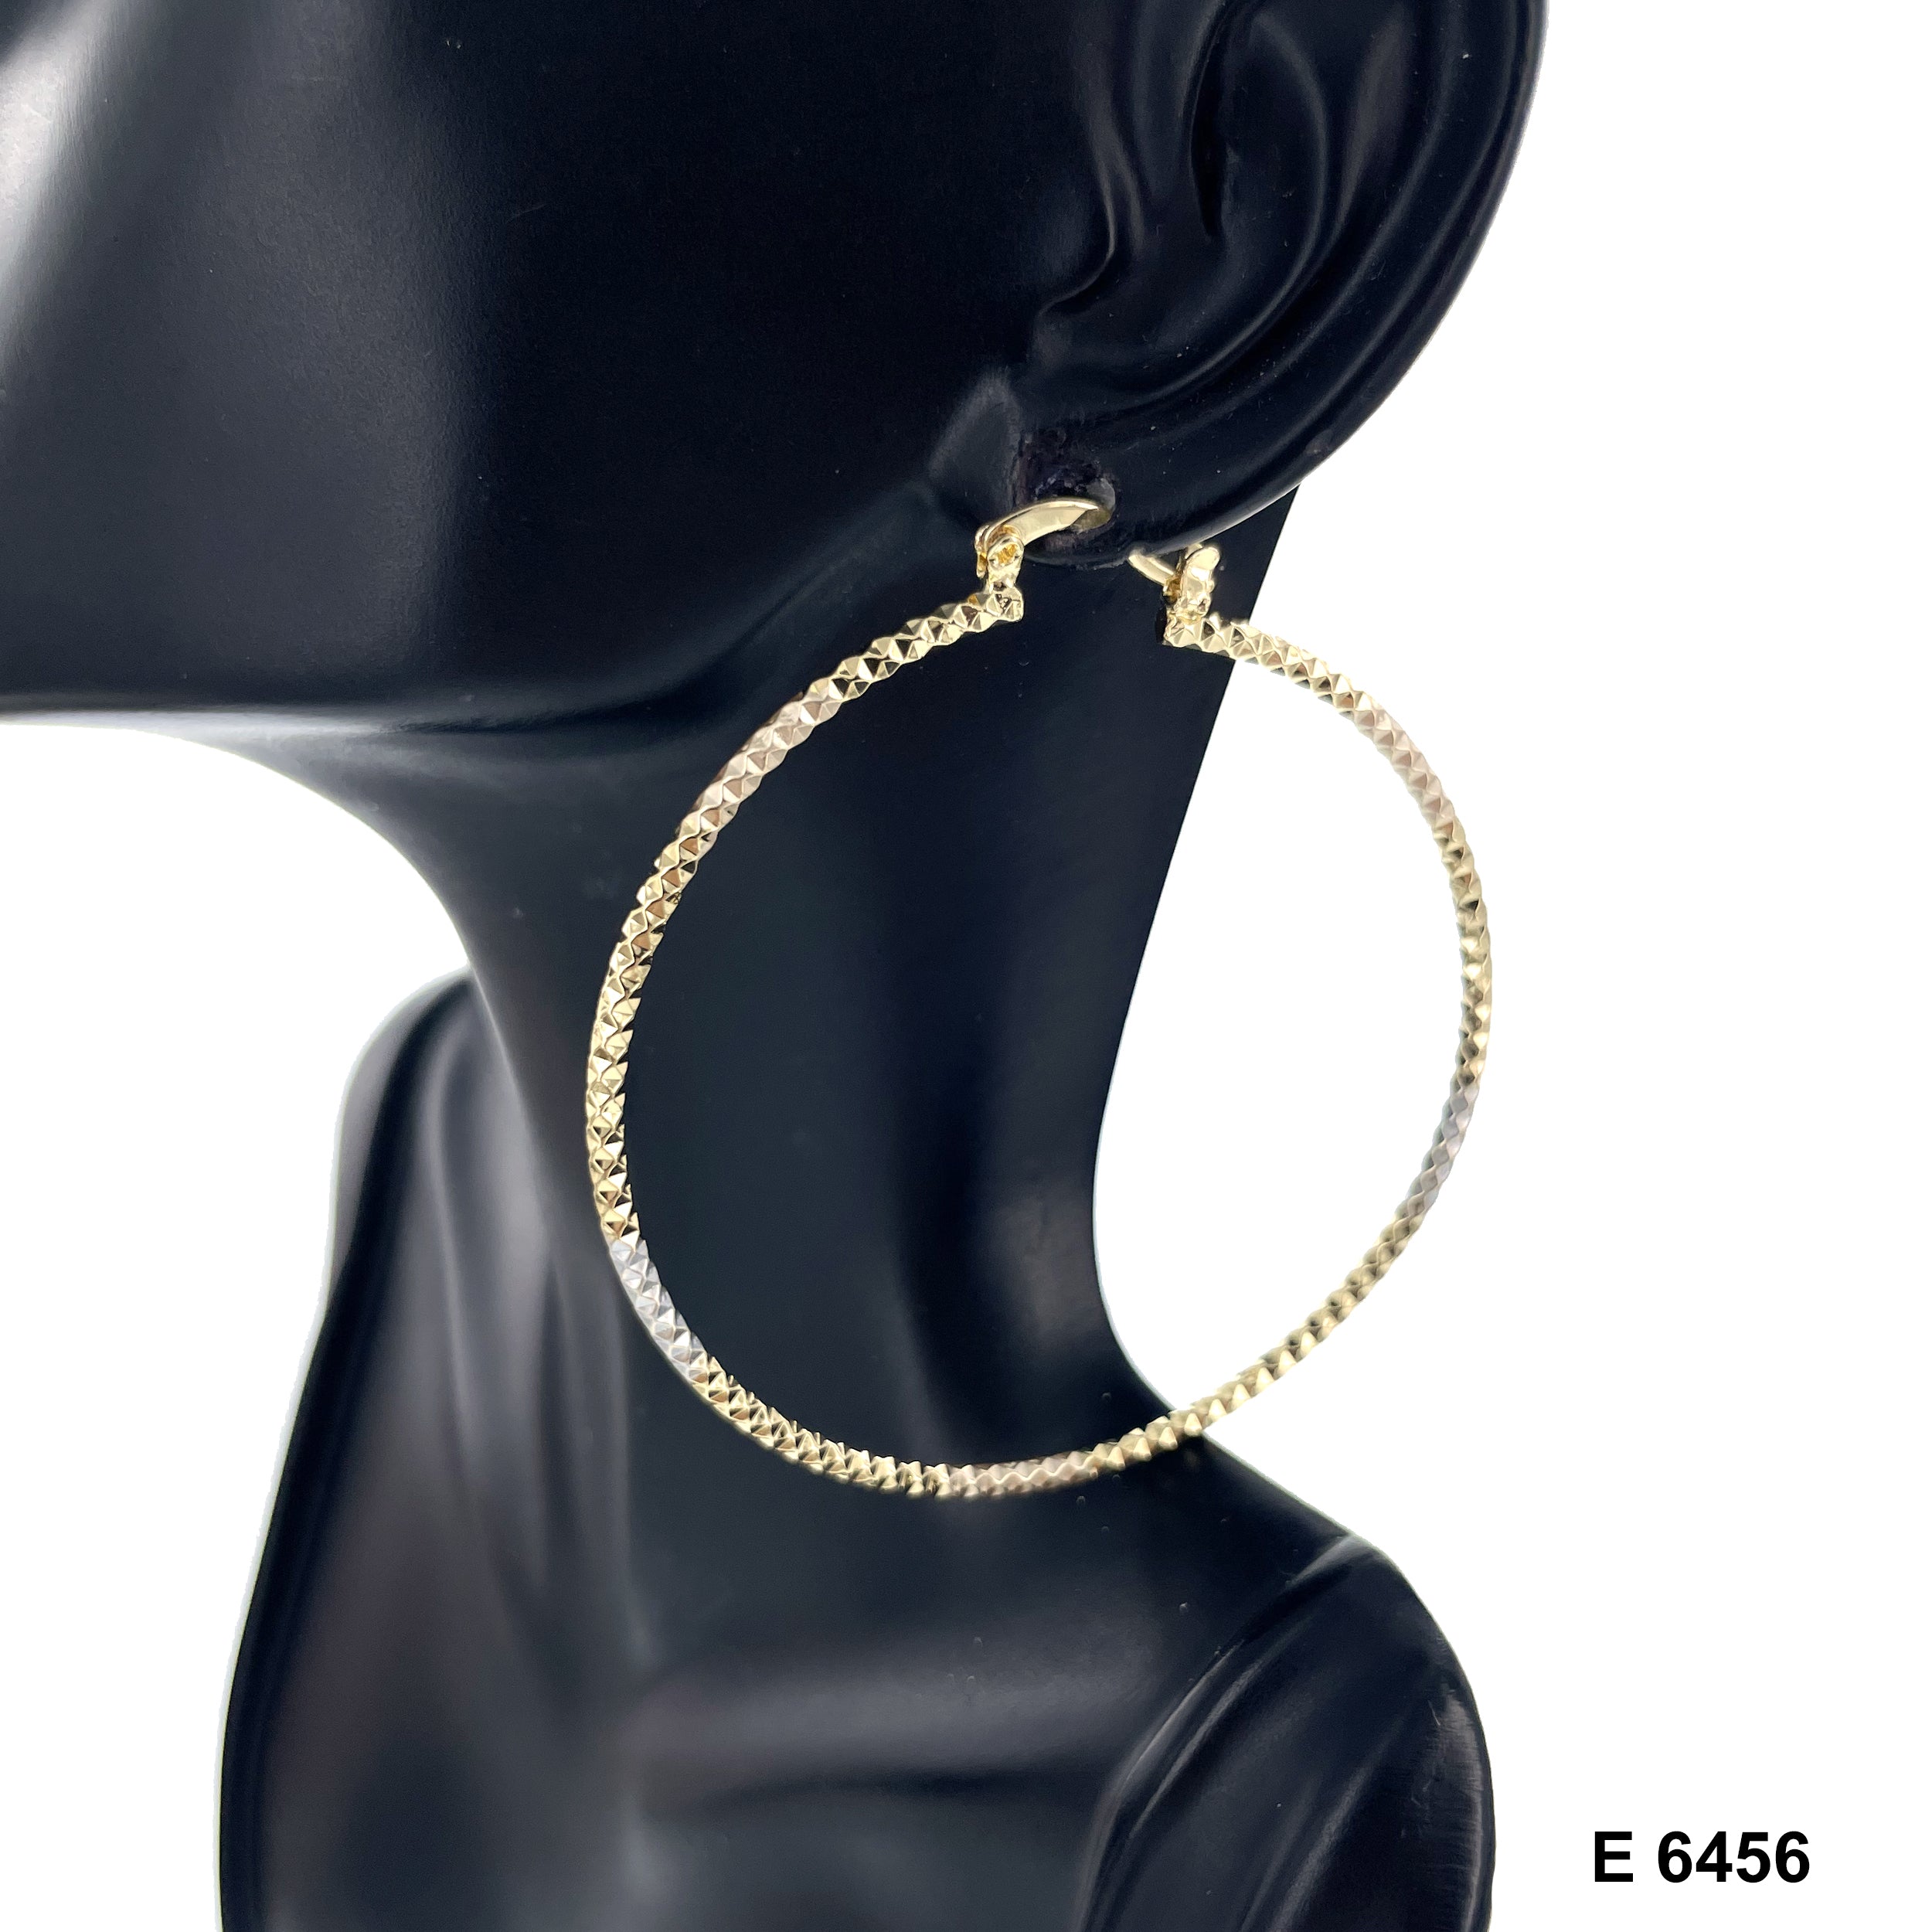 Engraved Hoop Earrings E 6456